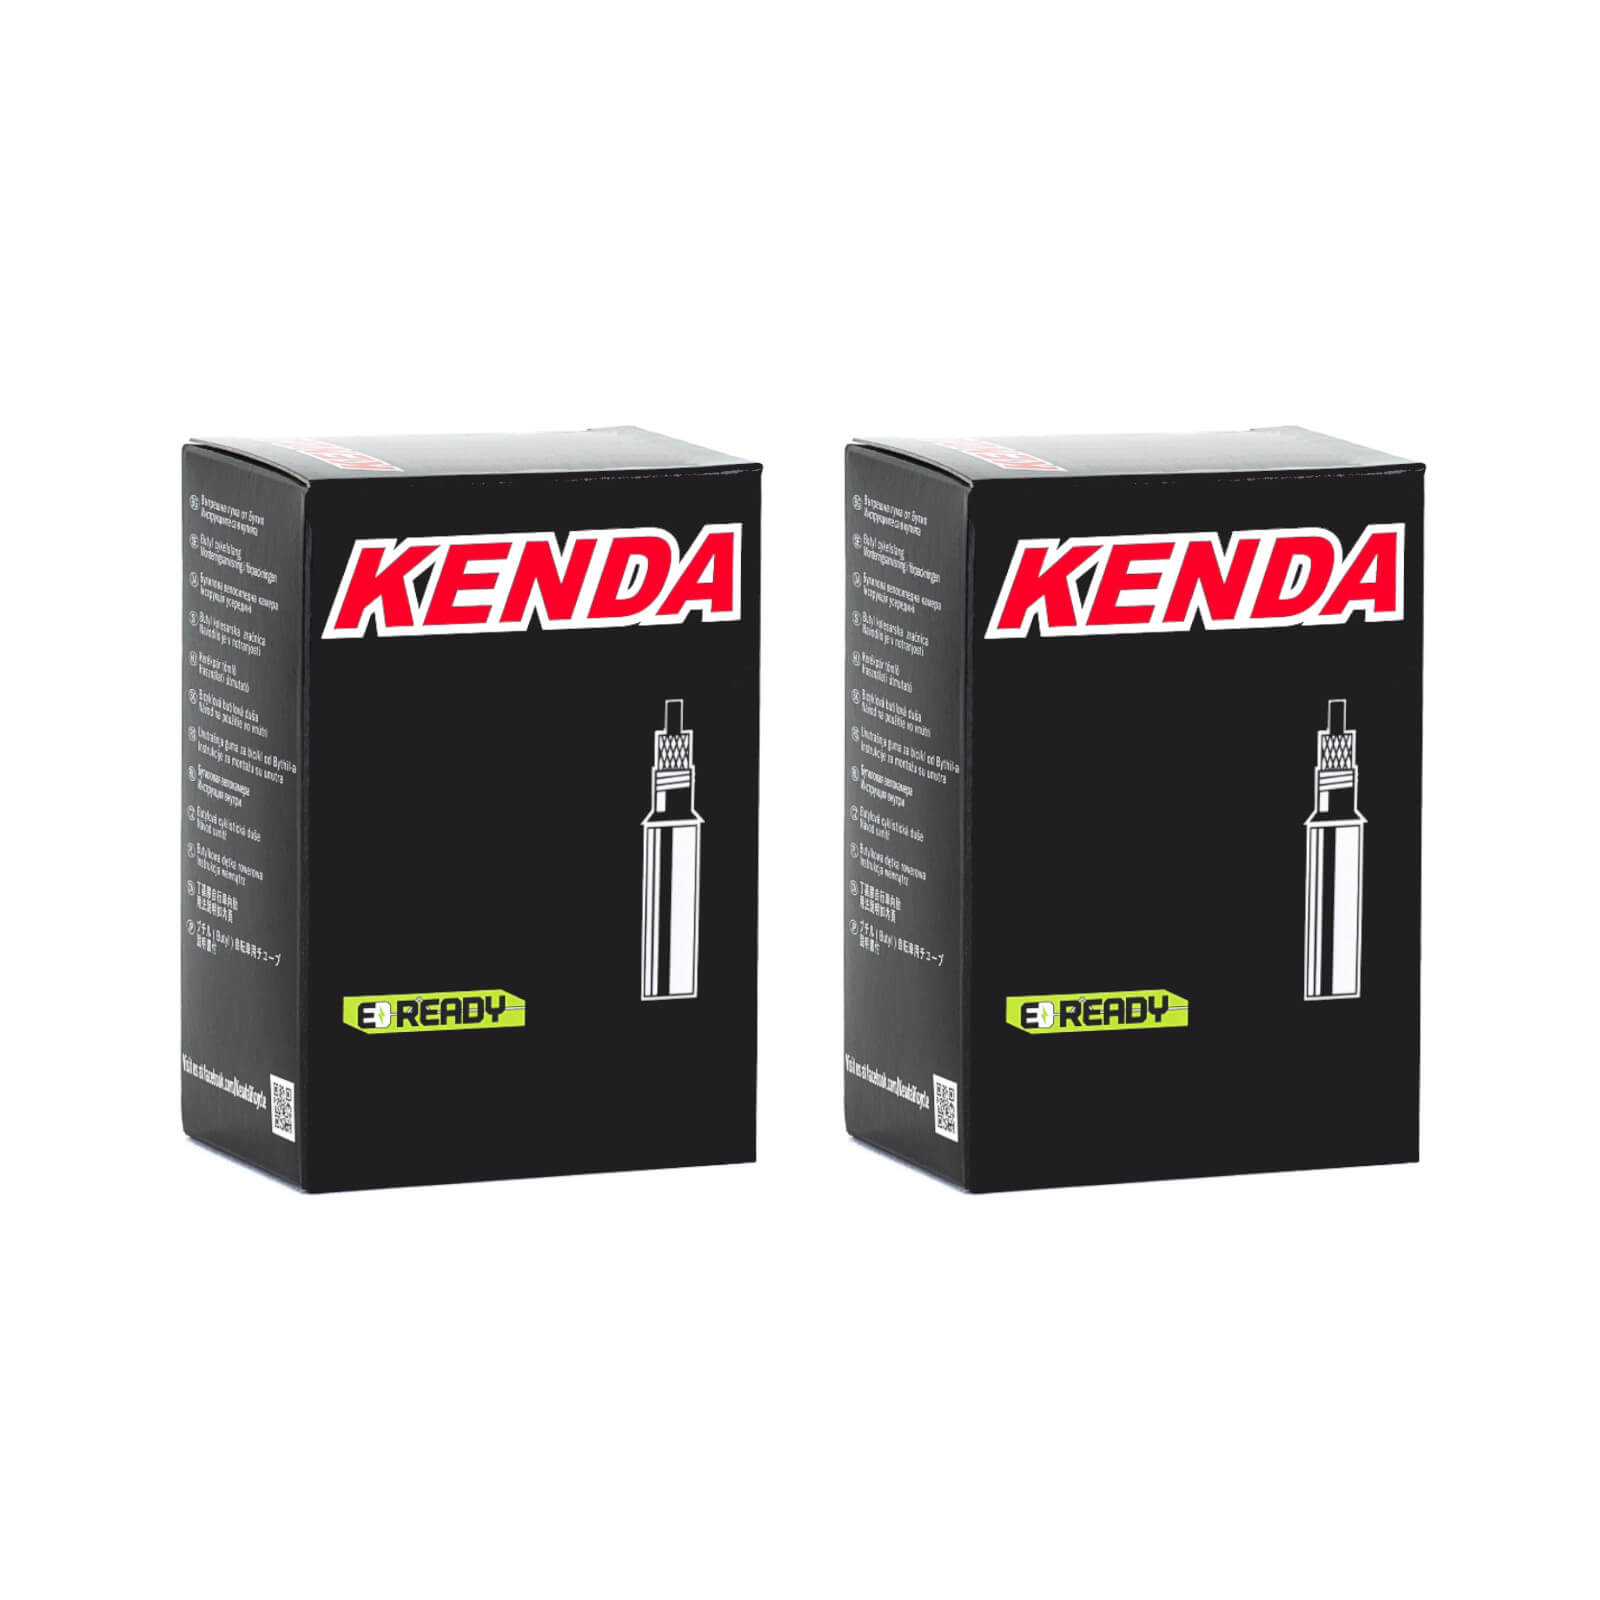 Kenda 27.5x2.8-3.0" Removable Core 27.5 Inch Presta Valve Bike Inner Tube Pack of 2